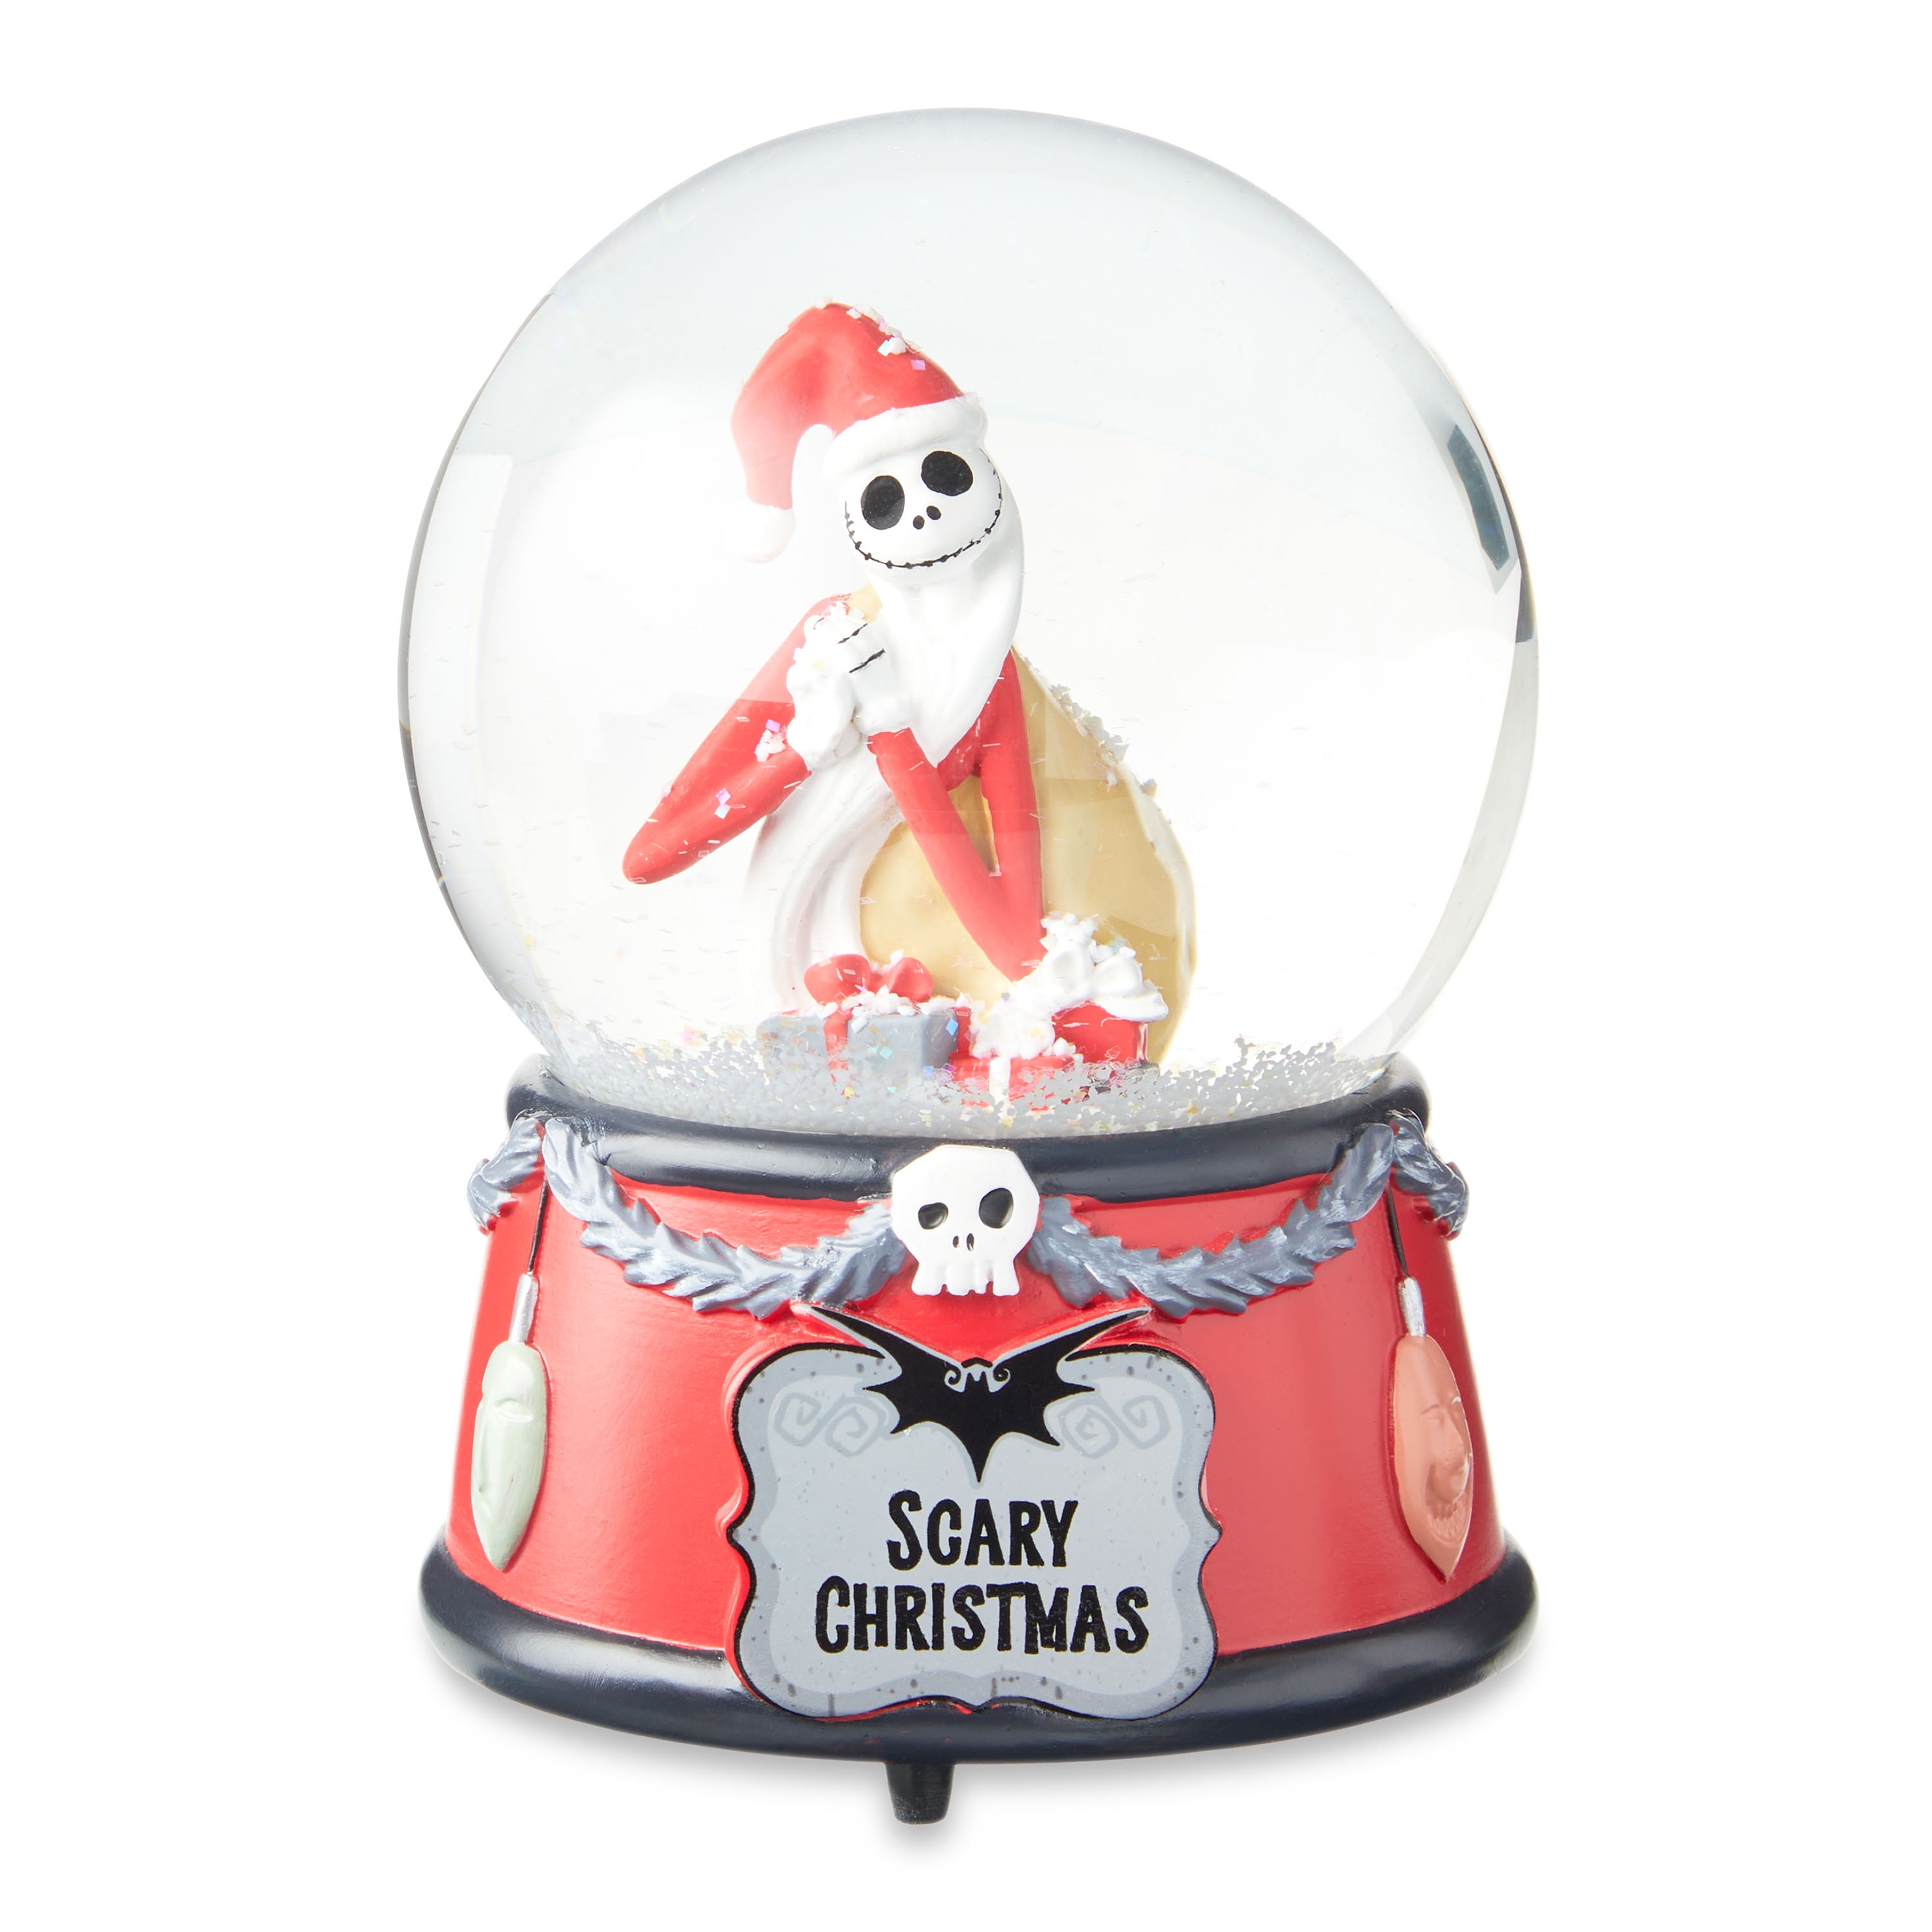 Disney, The Nightmare Before Christmas, Jack Skellington Musical Snow Globe, Scary Christmas,100mm Globe, Multi-Color, Resin, Glass